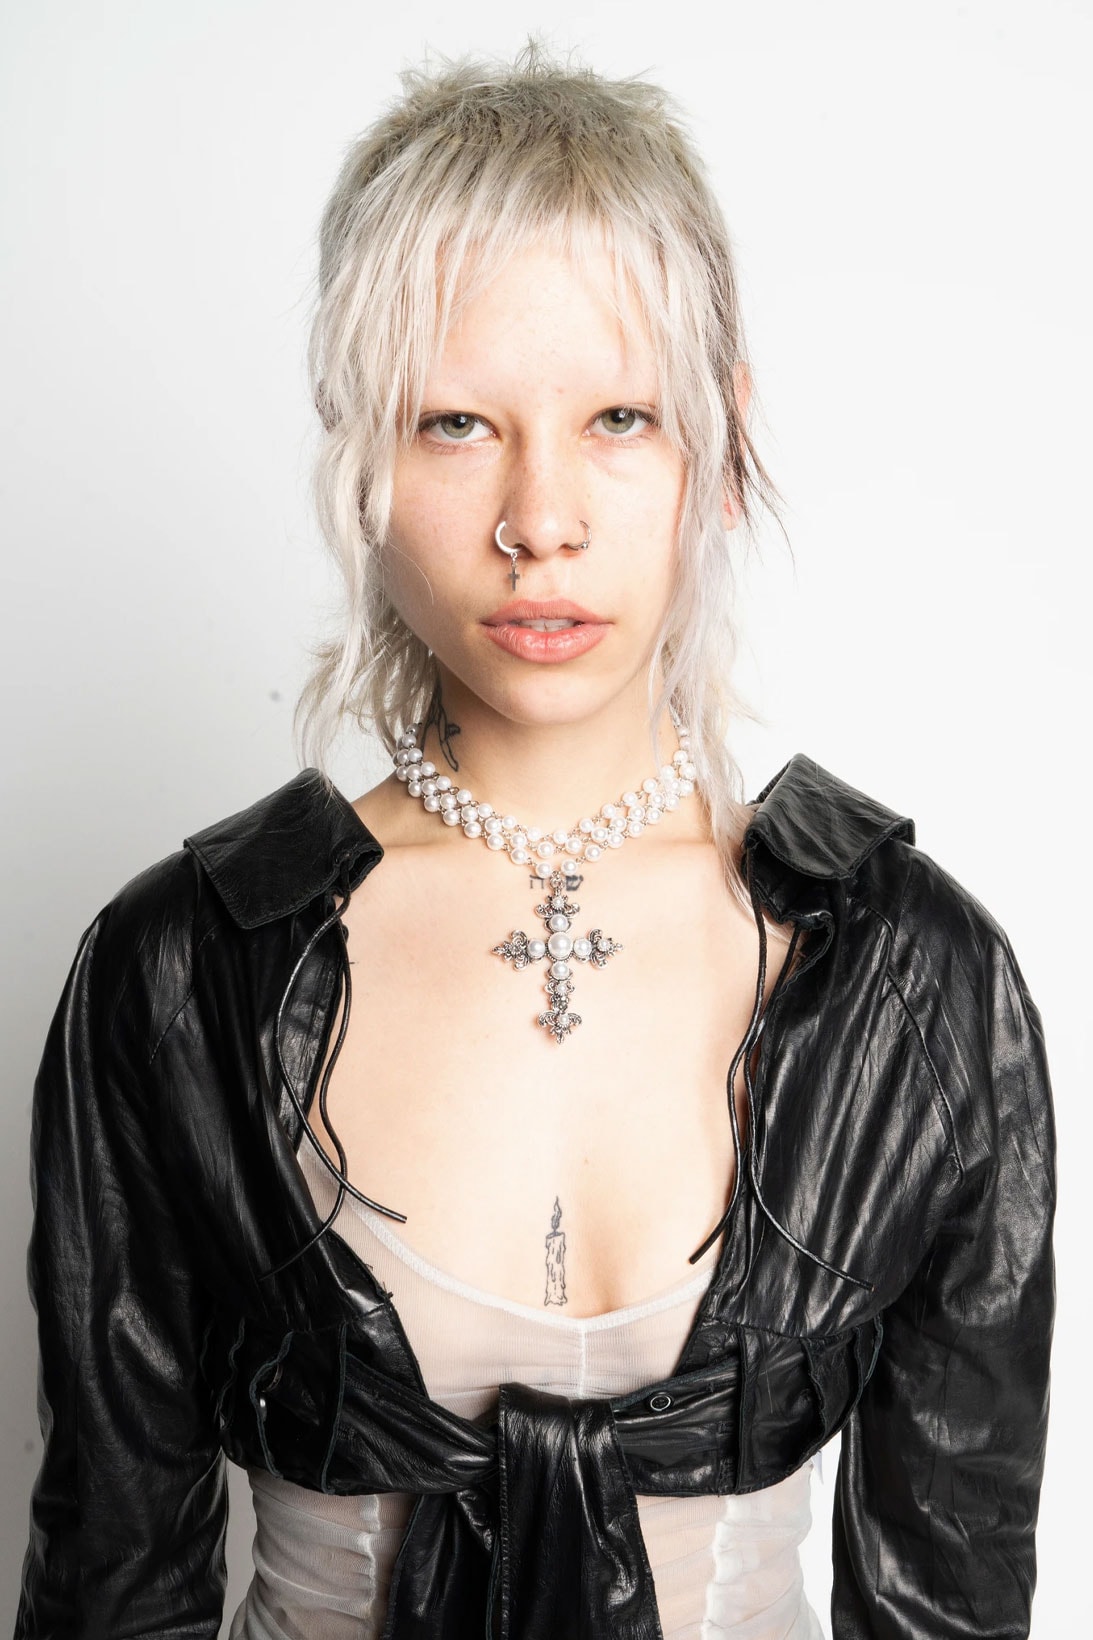 ohtnyc rising new york designer jinsol woo piercing cross chain necklace tank top